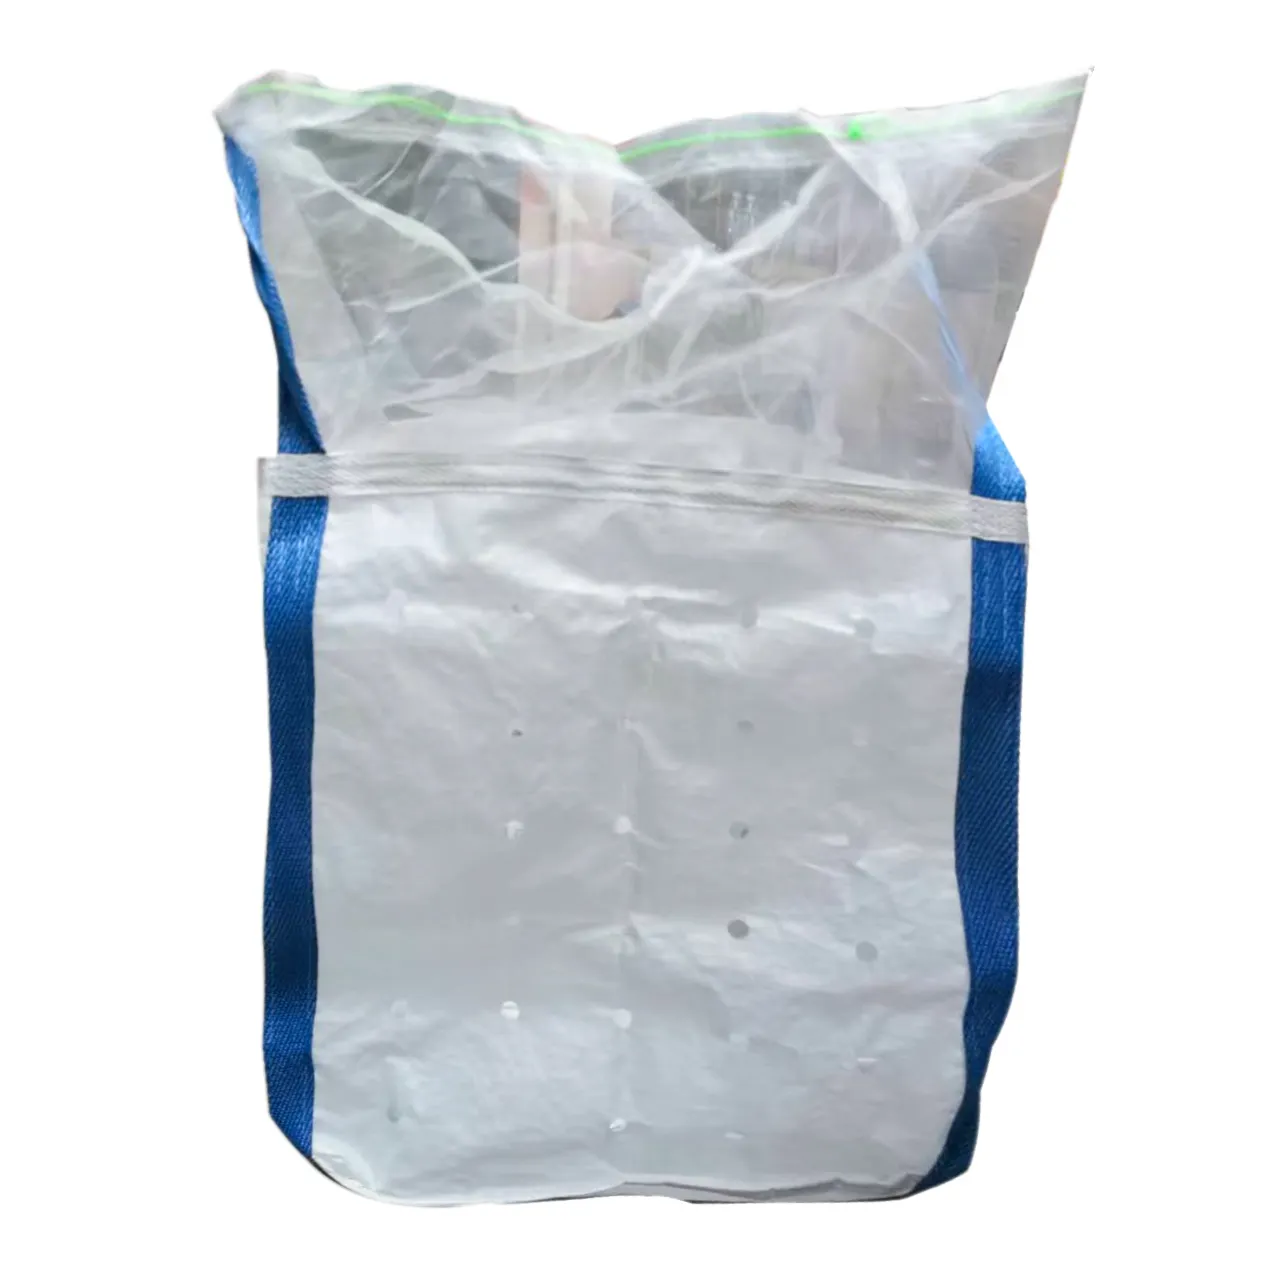 Potato special packaging transport big bag breathable mesh bag bottom pull ring design for easy loading and unloading